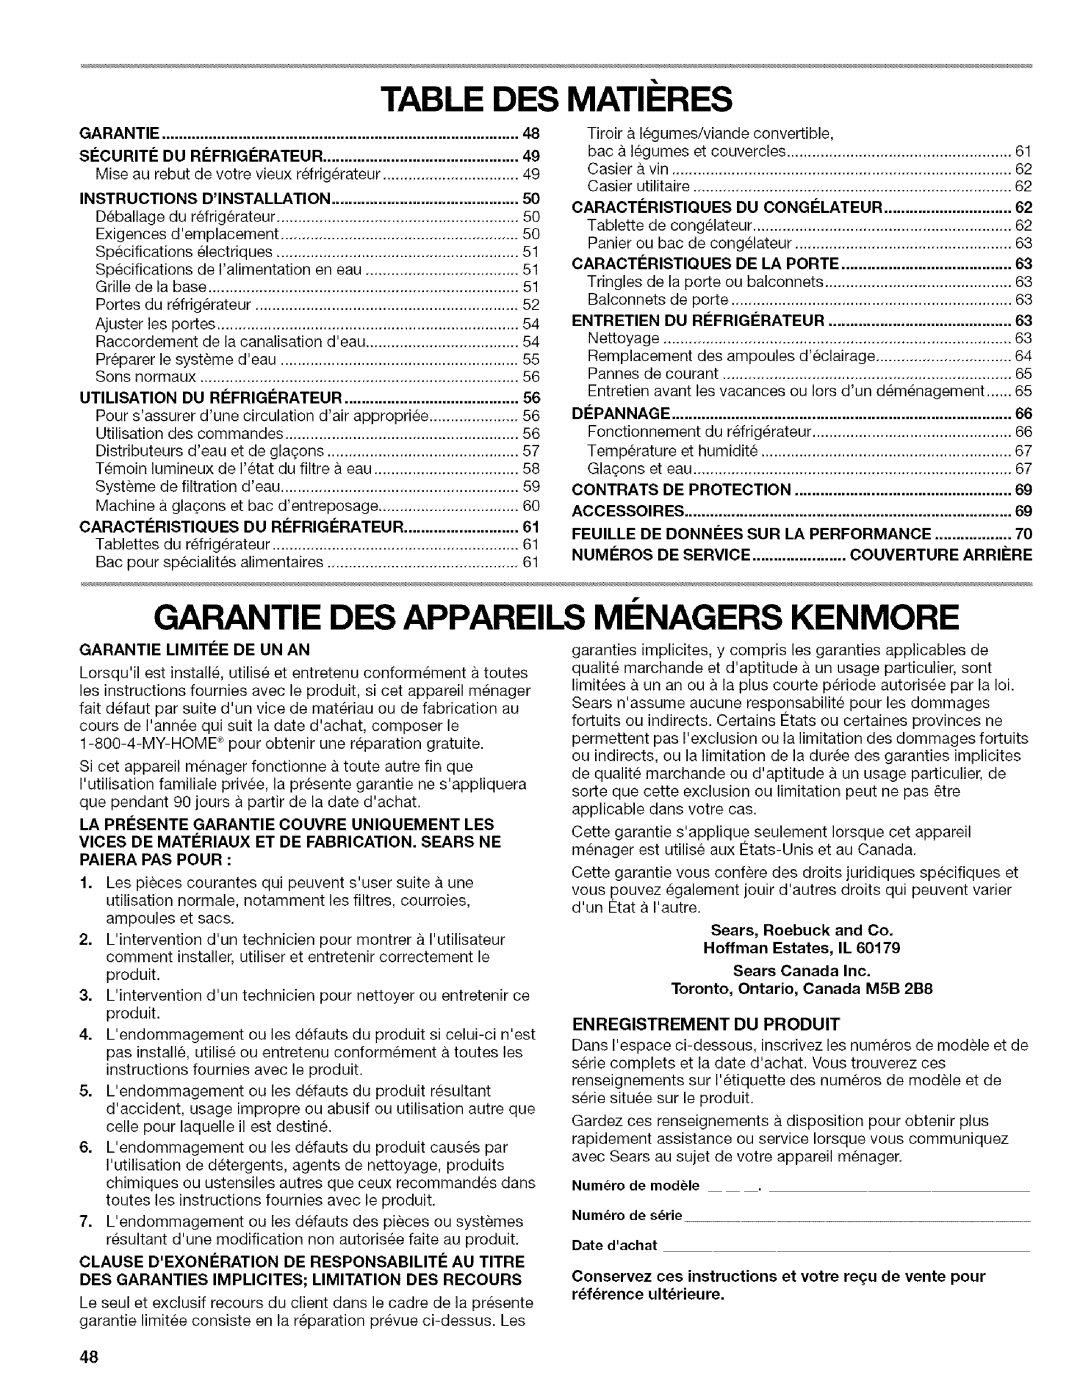 Kenmore WIOI67097A manual Table Des Matii Res, Garantie Des Appareils Mi Nagers Kenmore, Instructions, Caracti-Ristiques 